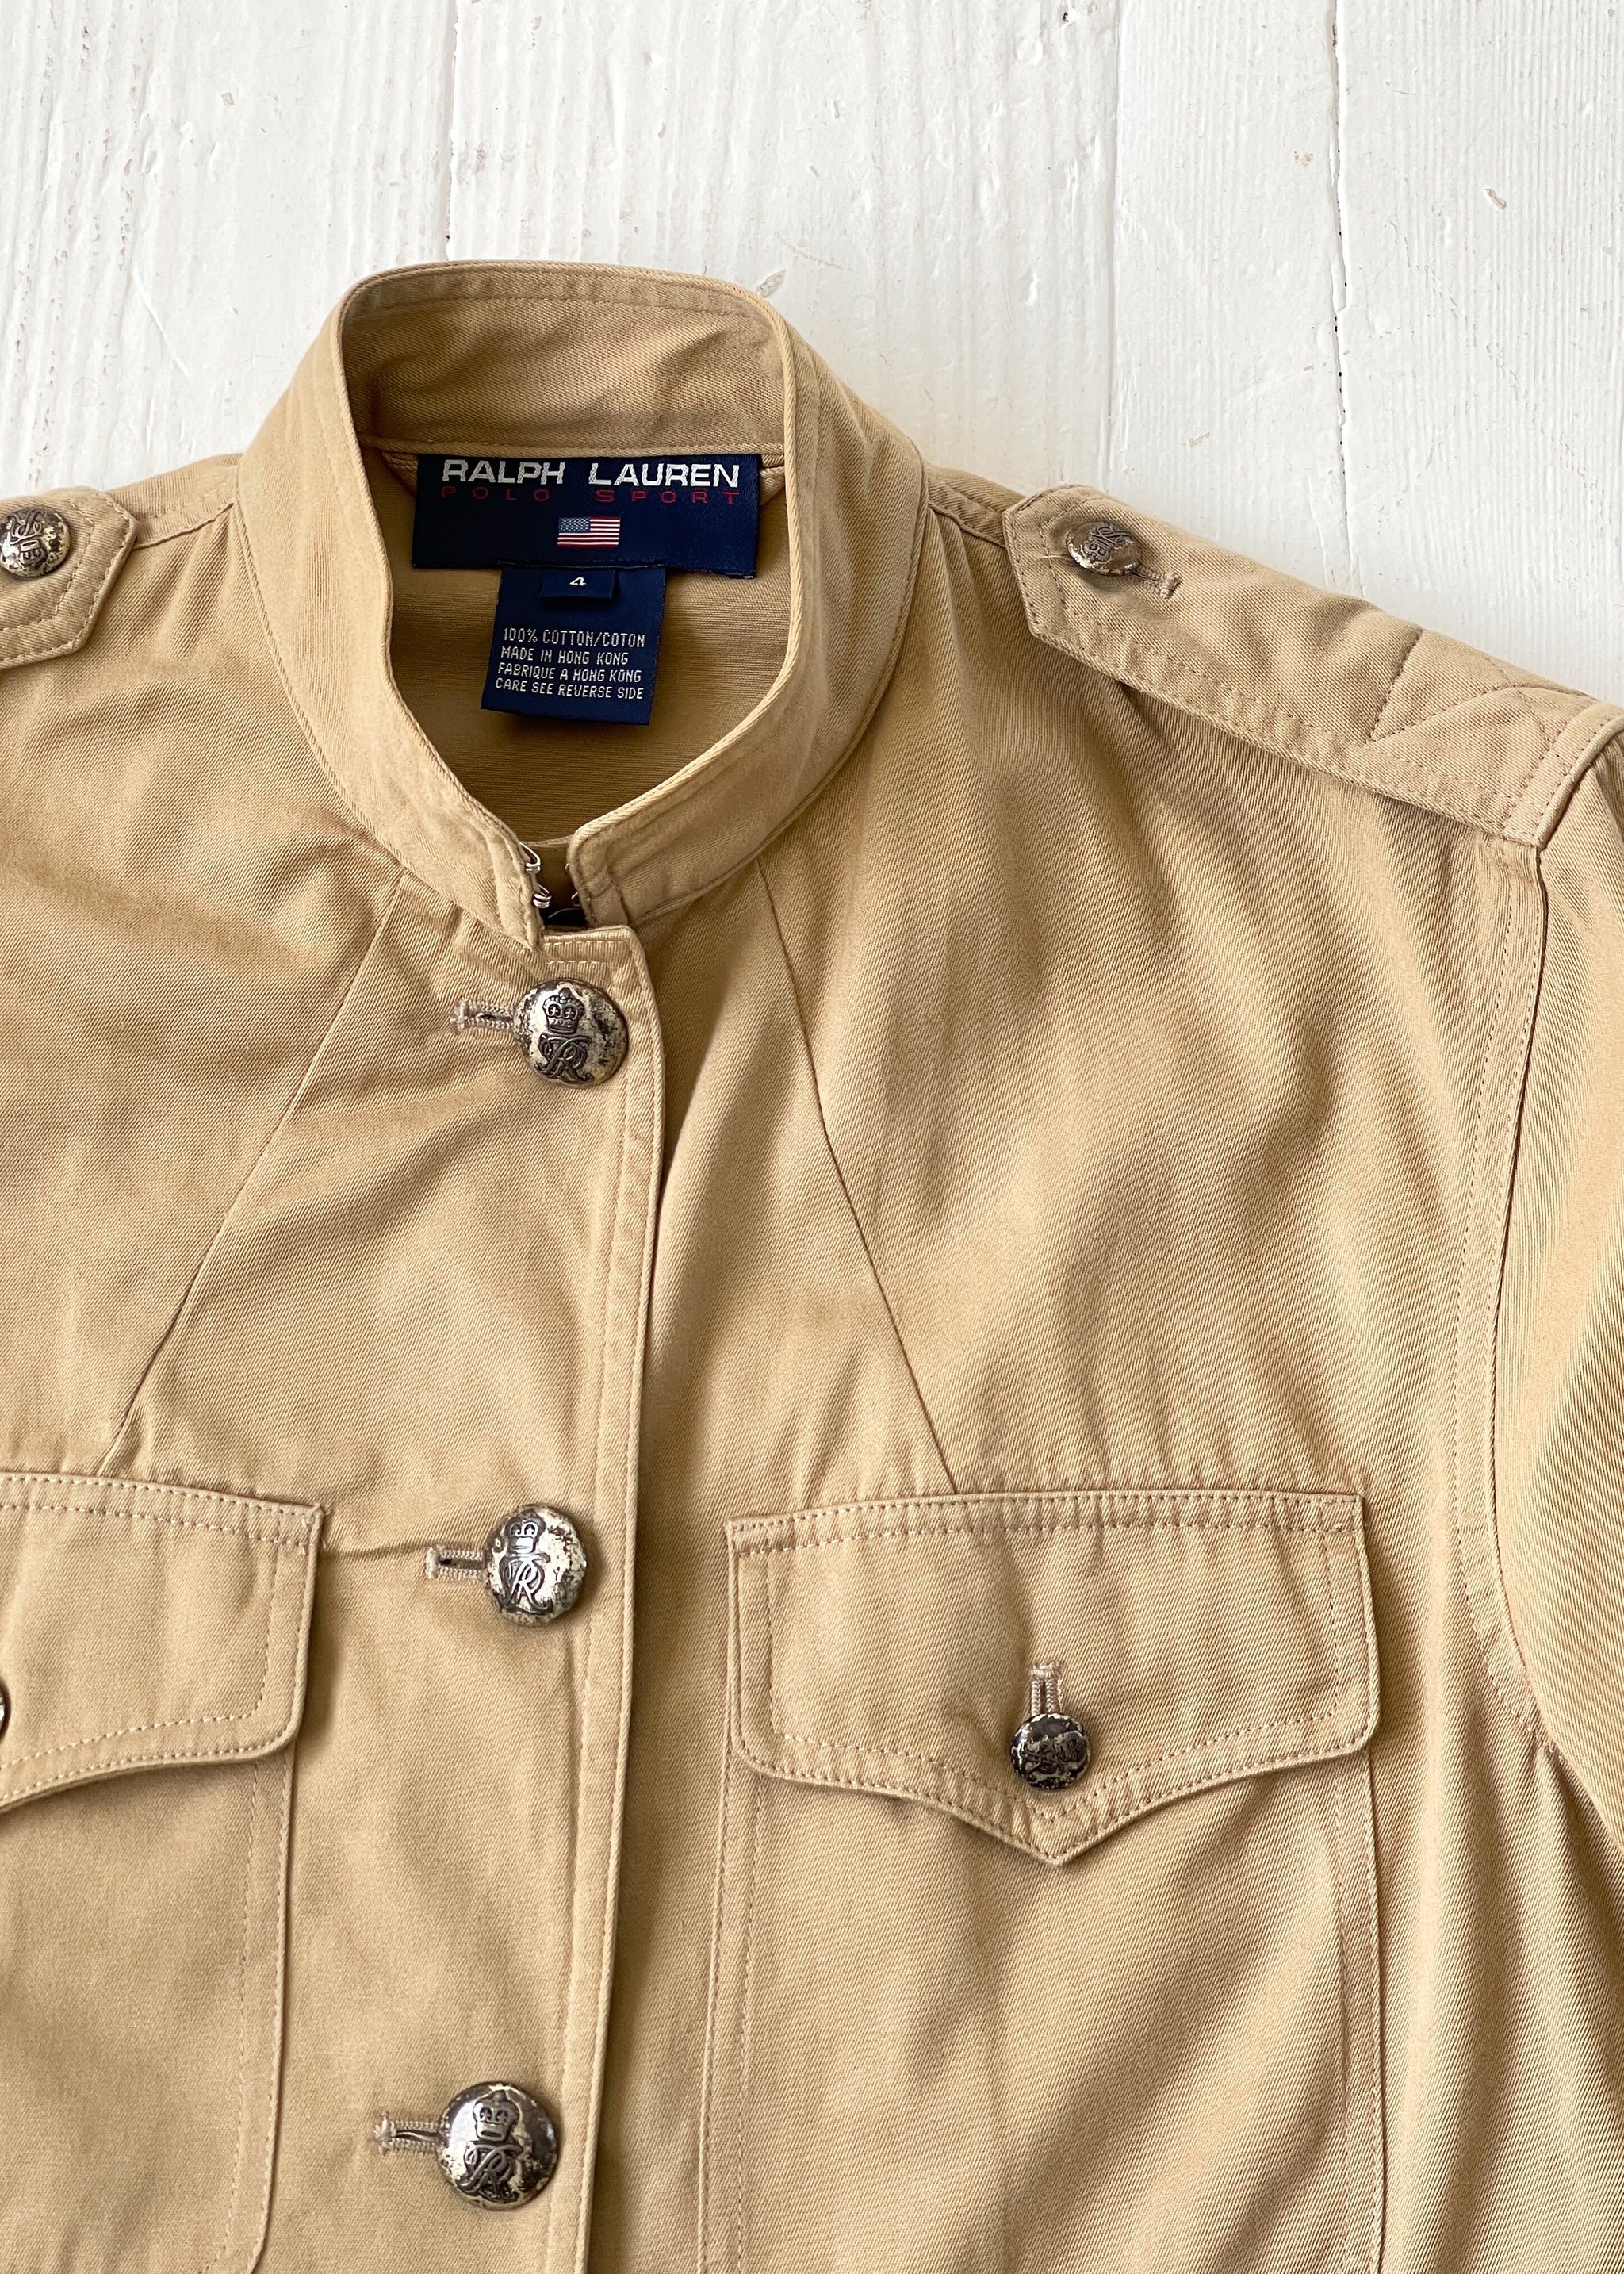 Vintage 1990s Ralph Lauren Military Style Jacket - Raleigh Vintage